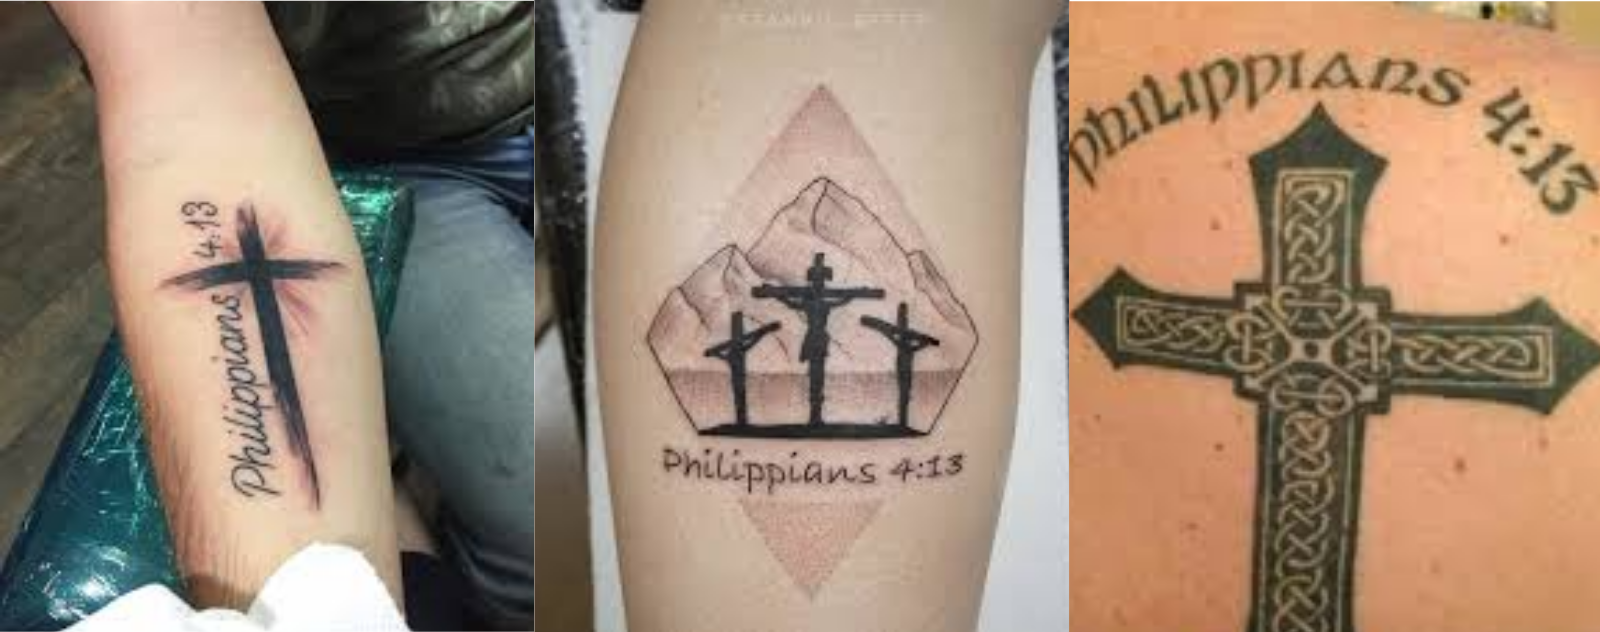 philippians-4-13-tattoo-with-cross-9